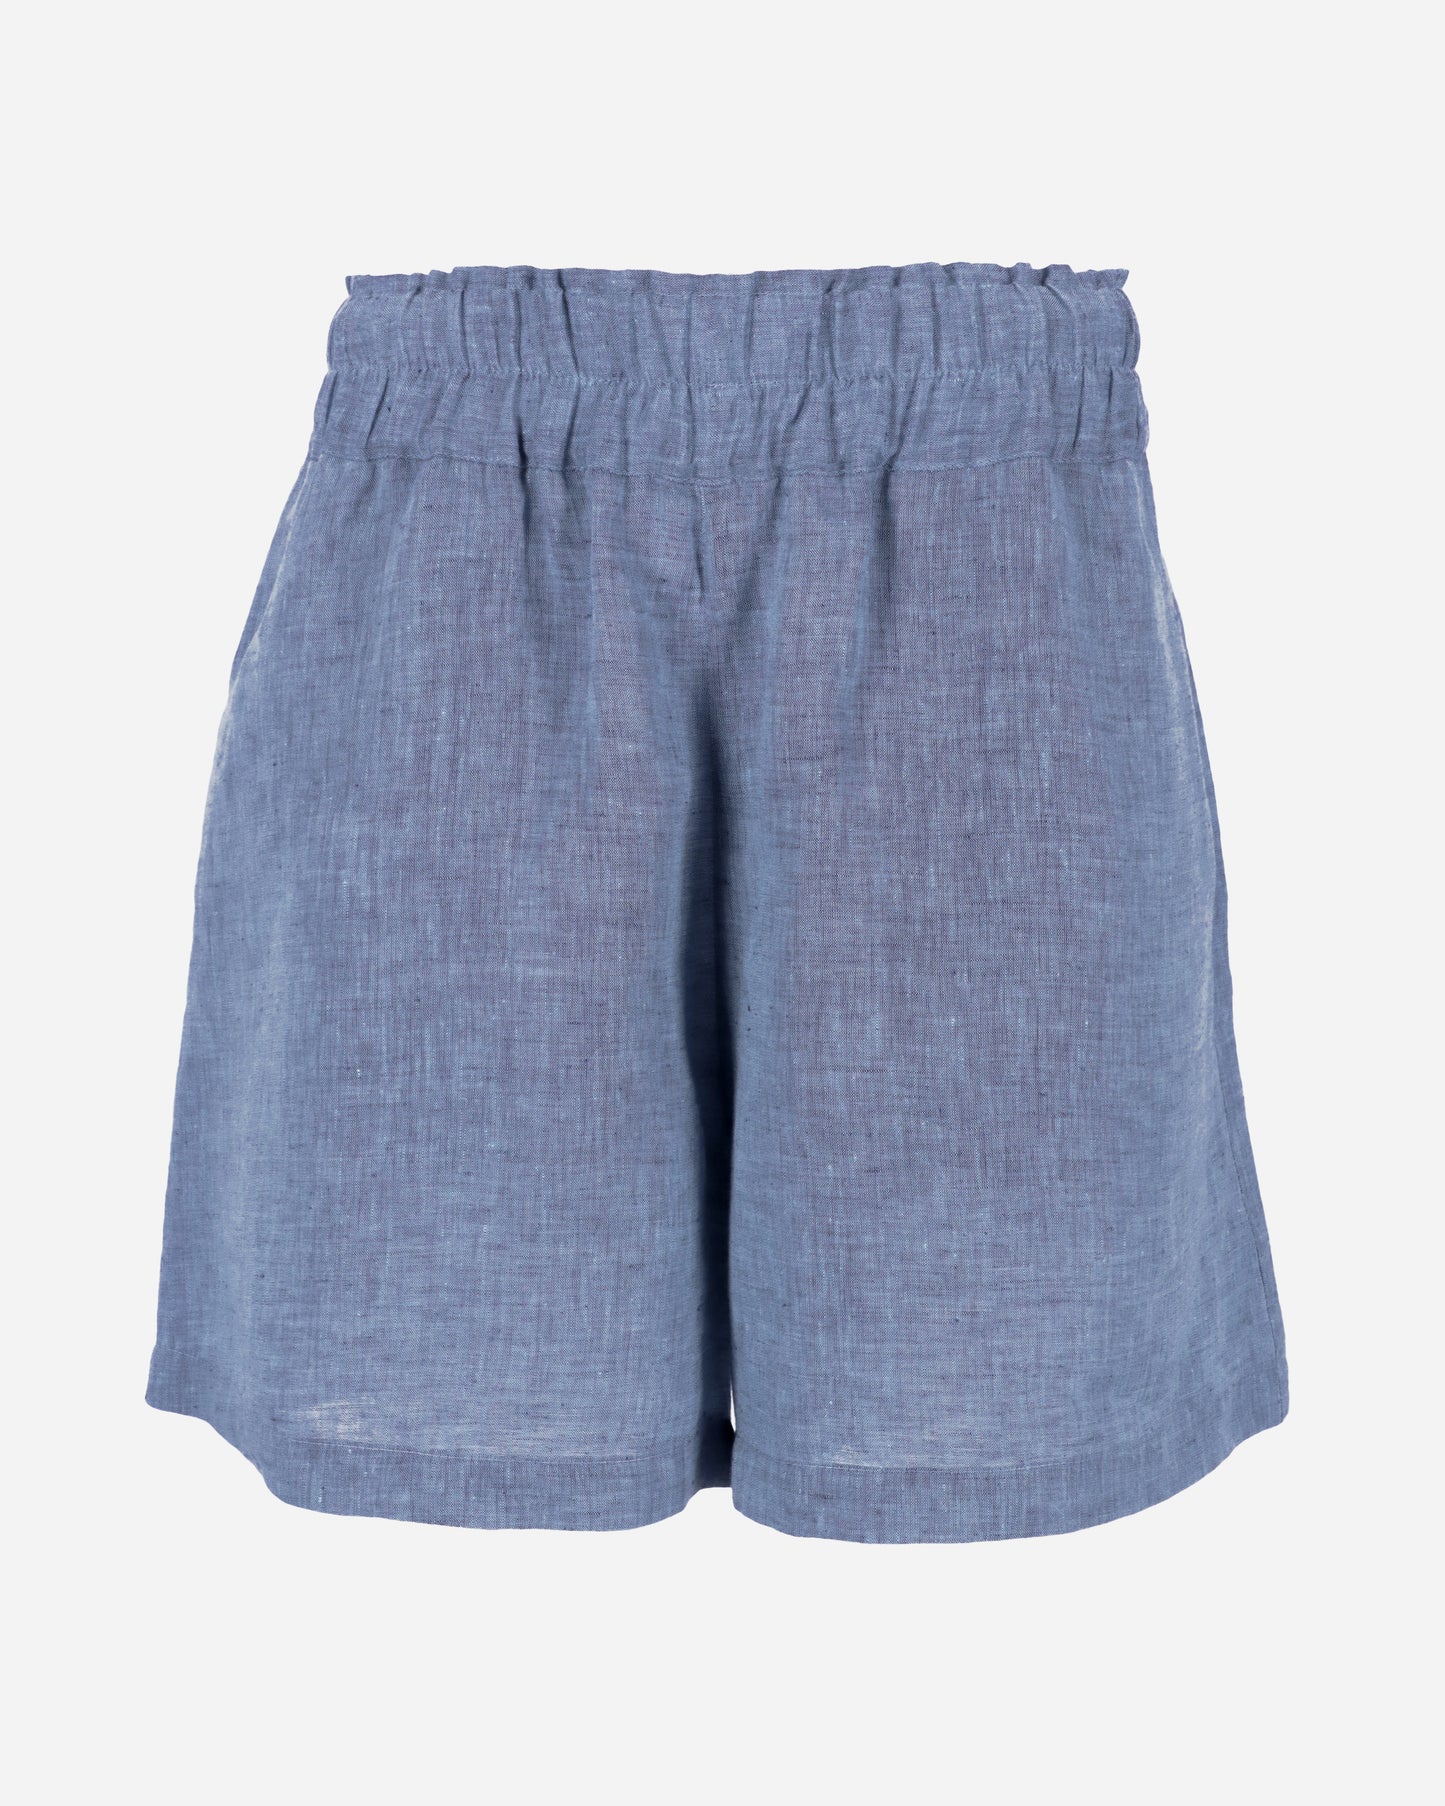 High waisted linen shorts CUENCA in Denim chambray - MagicLinen